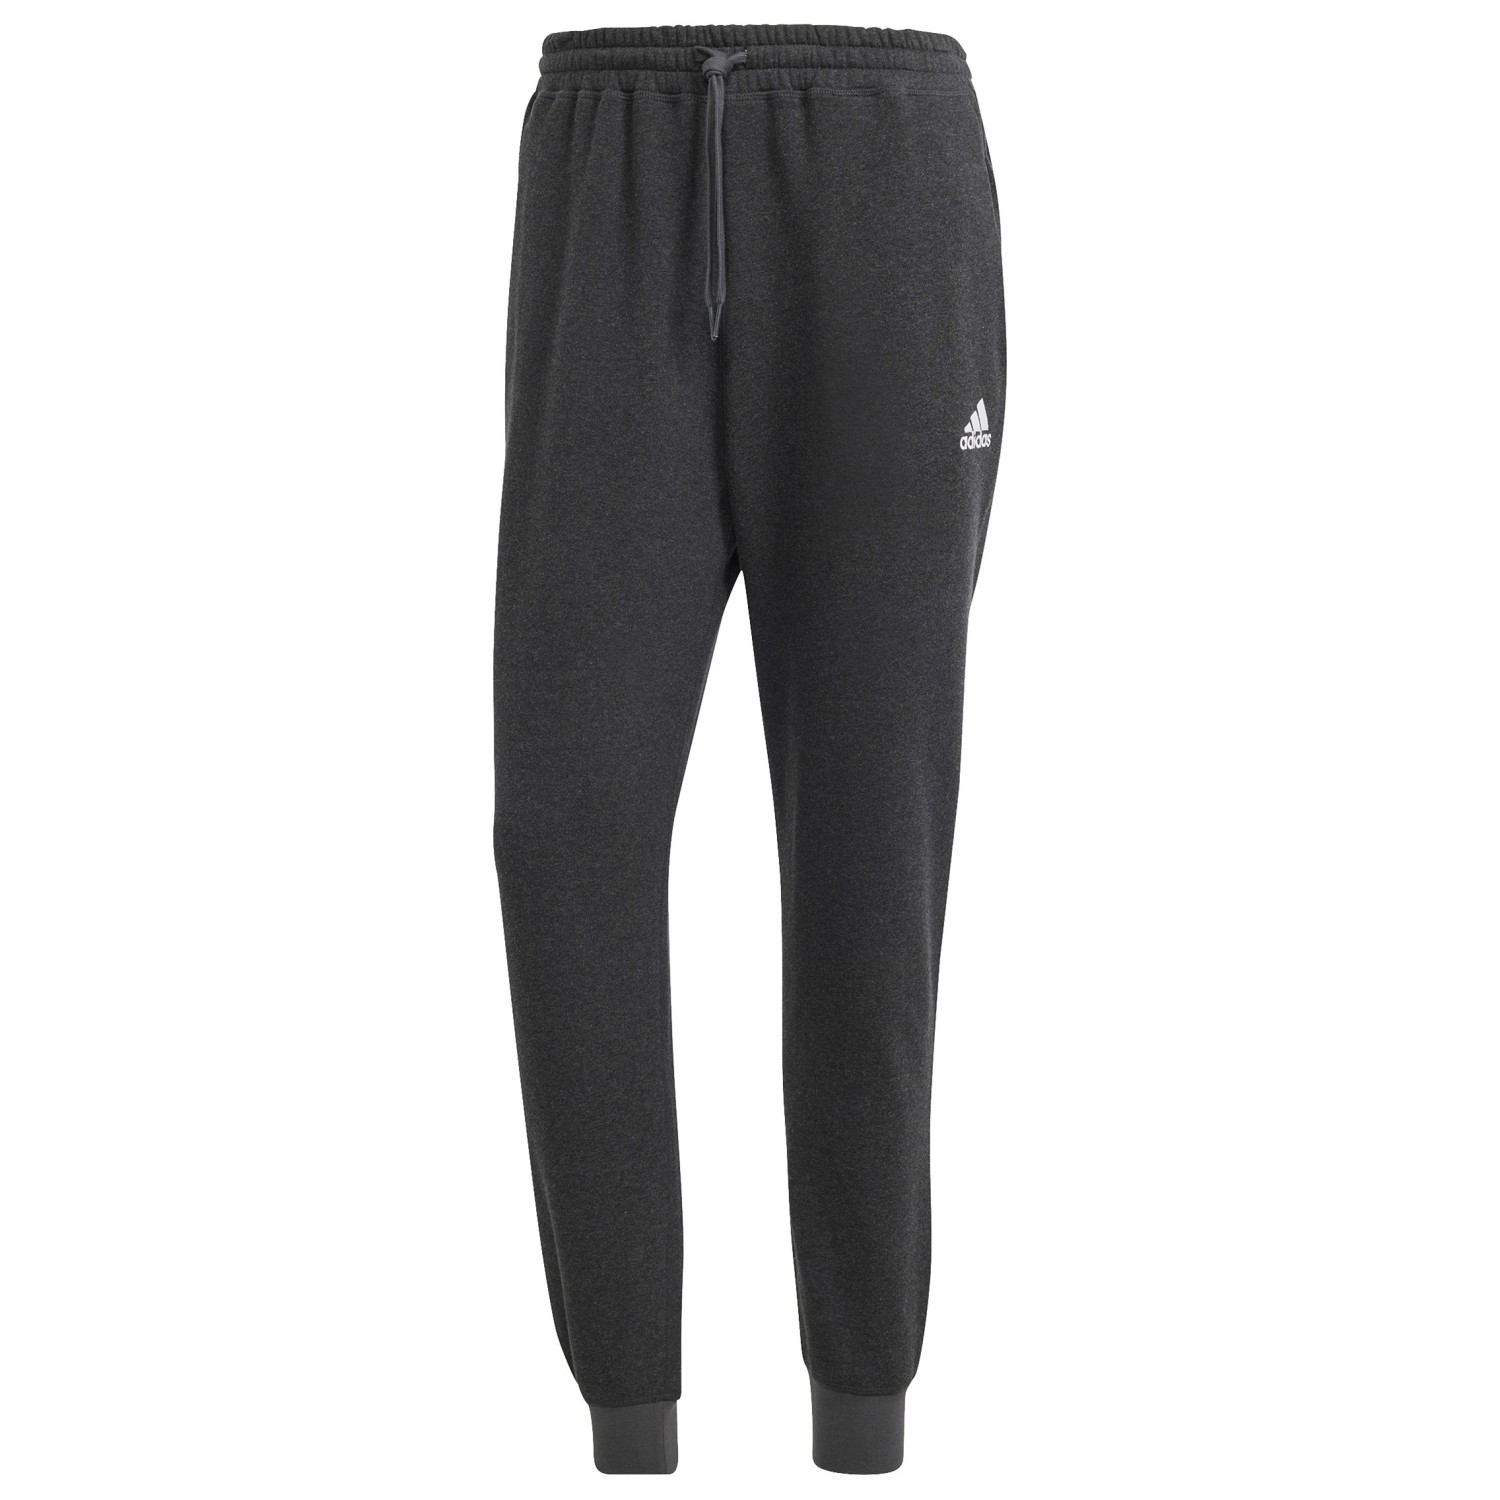 Тренировочные брюки Adidas Melange Pant, цвет Black Melange брюки муж h67150 adidas tennis pant black white размер m